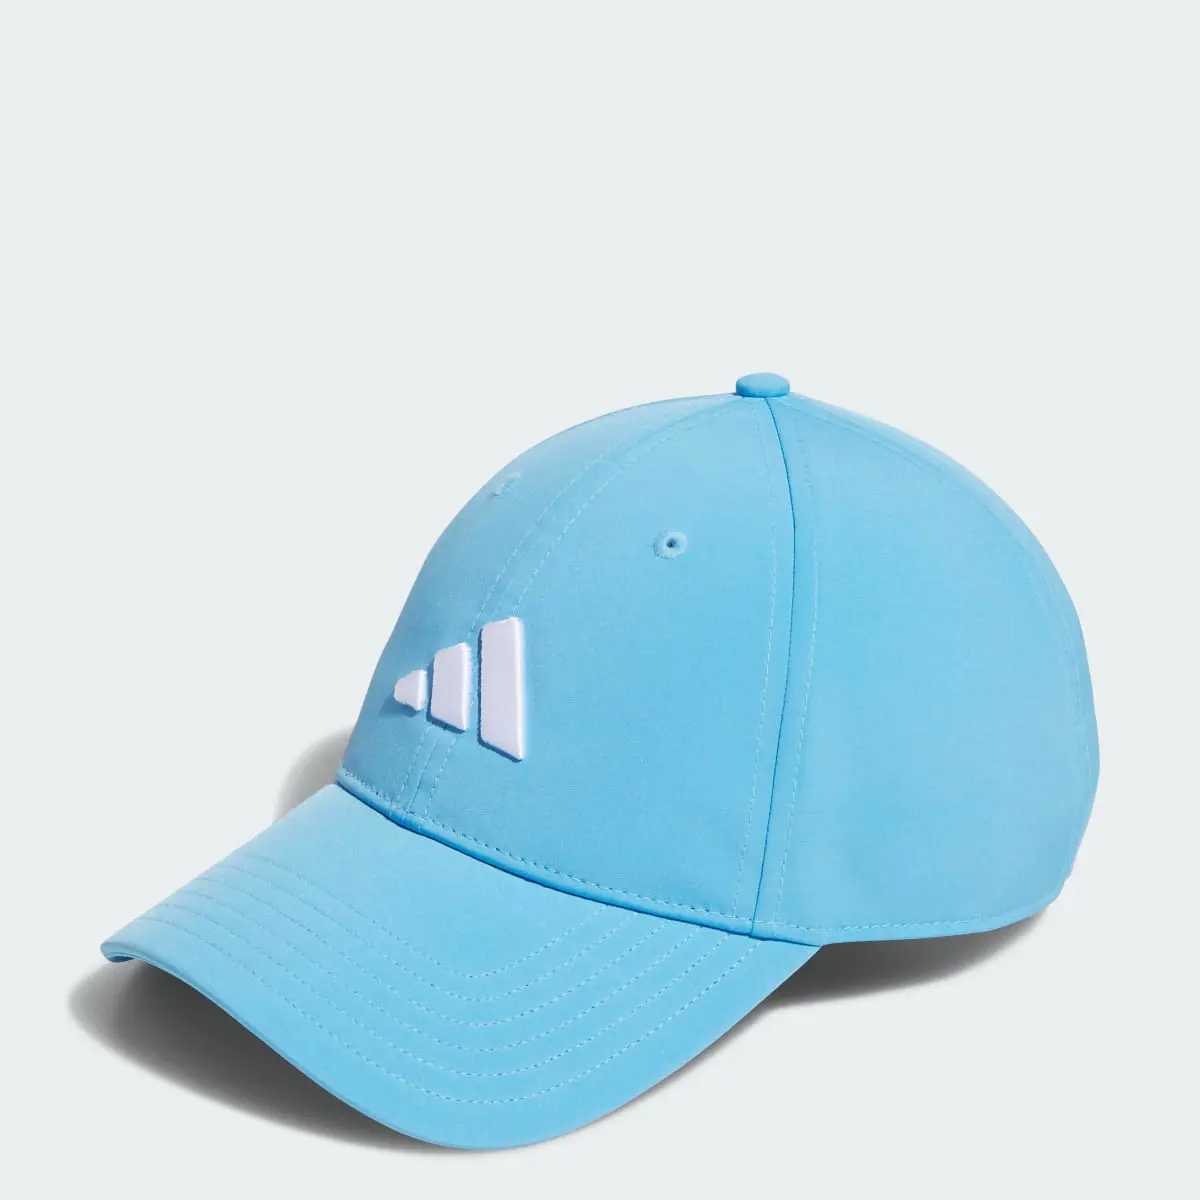 Adidas Women's Tour Badge Hat. 1